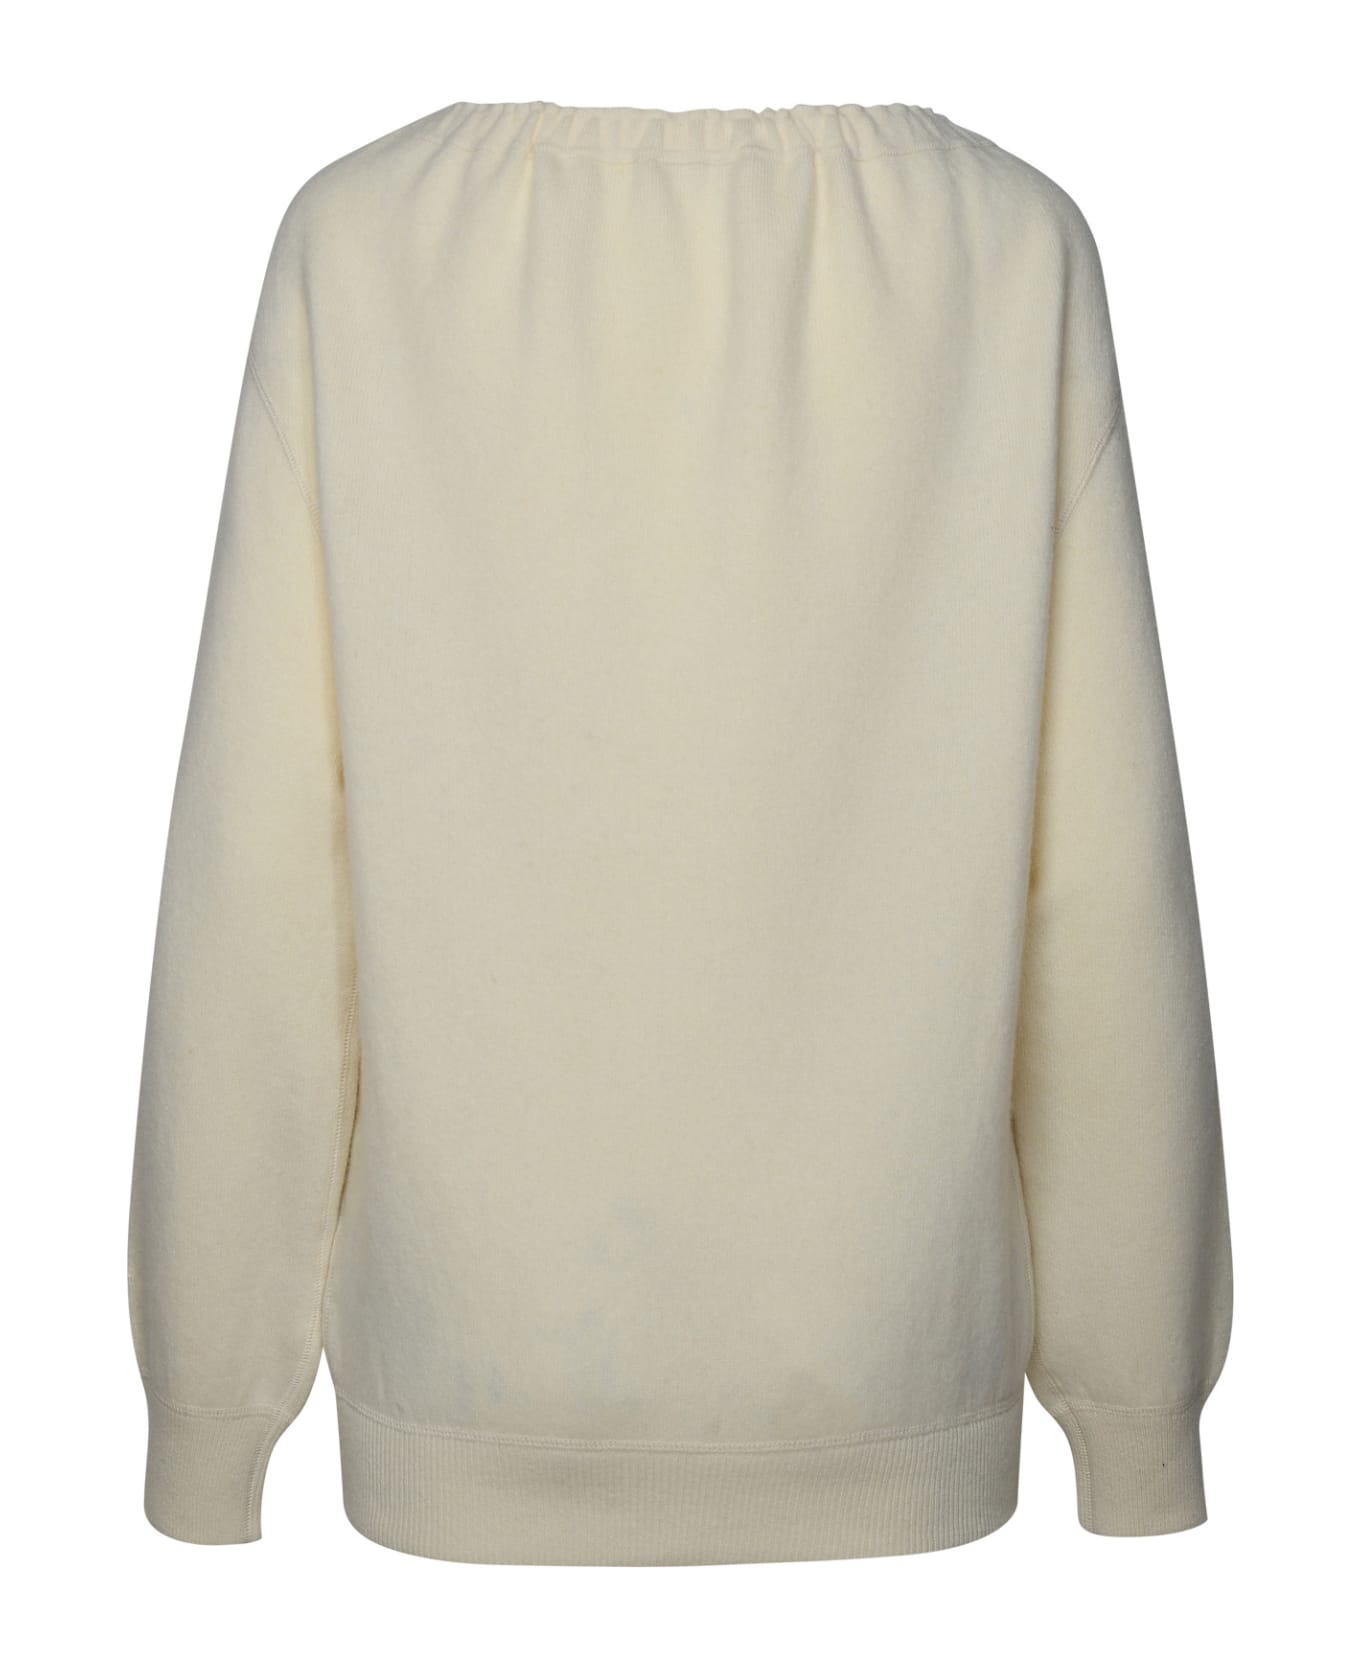 Jil Sander Cream Cashmere Sweater - Cream